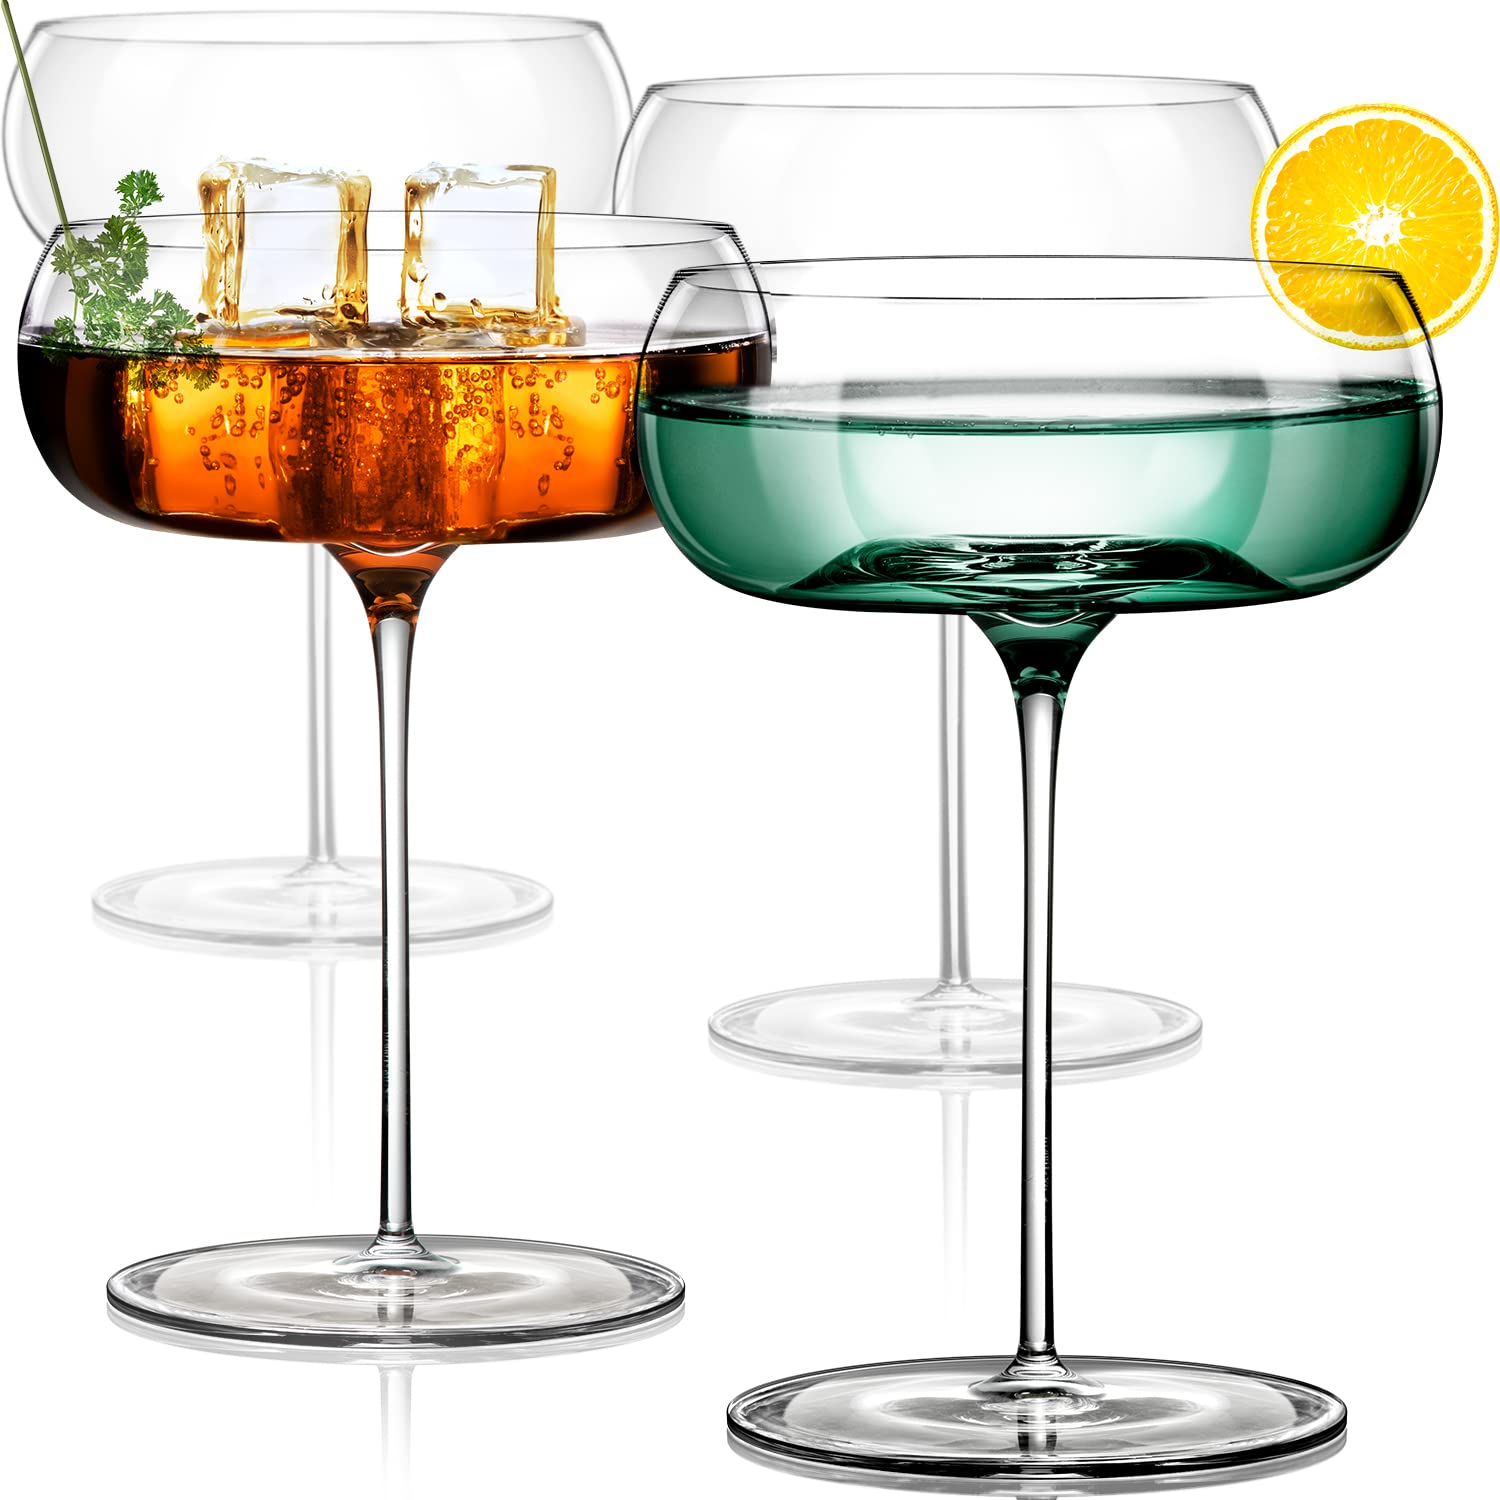 LUNA & MANTHA Unique coupe glasses Set of 4 8 oz Hand-Blown crystal Round Martini glasses Art Deco cocktail glasses Set for Pisco Sour, champa